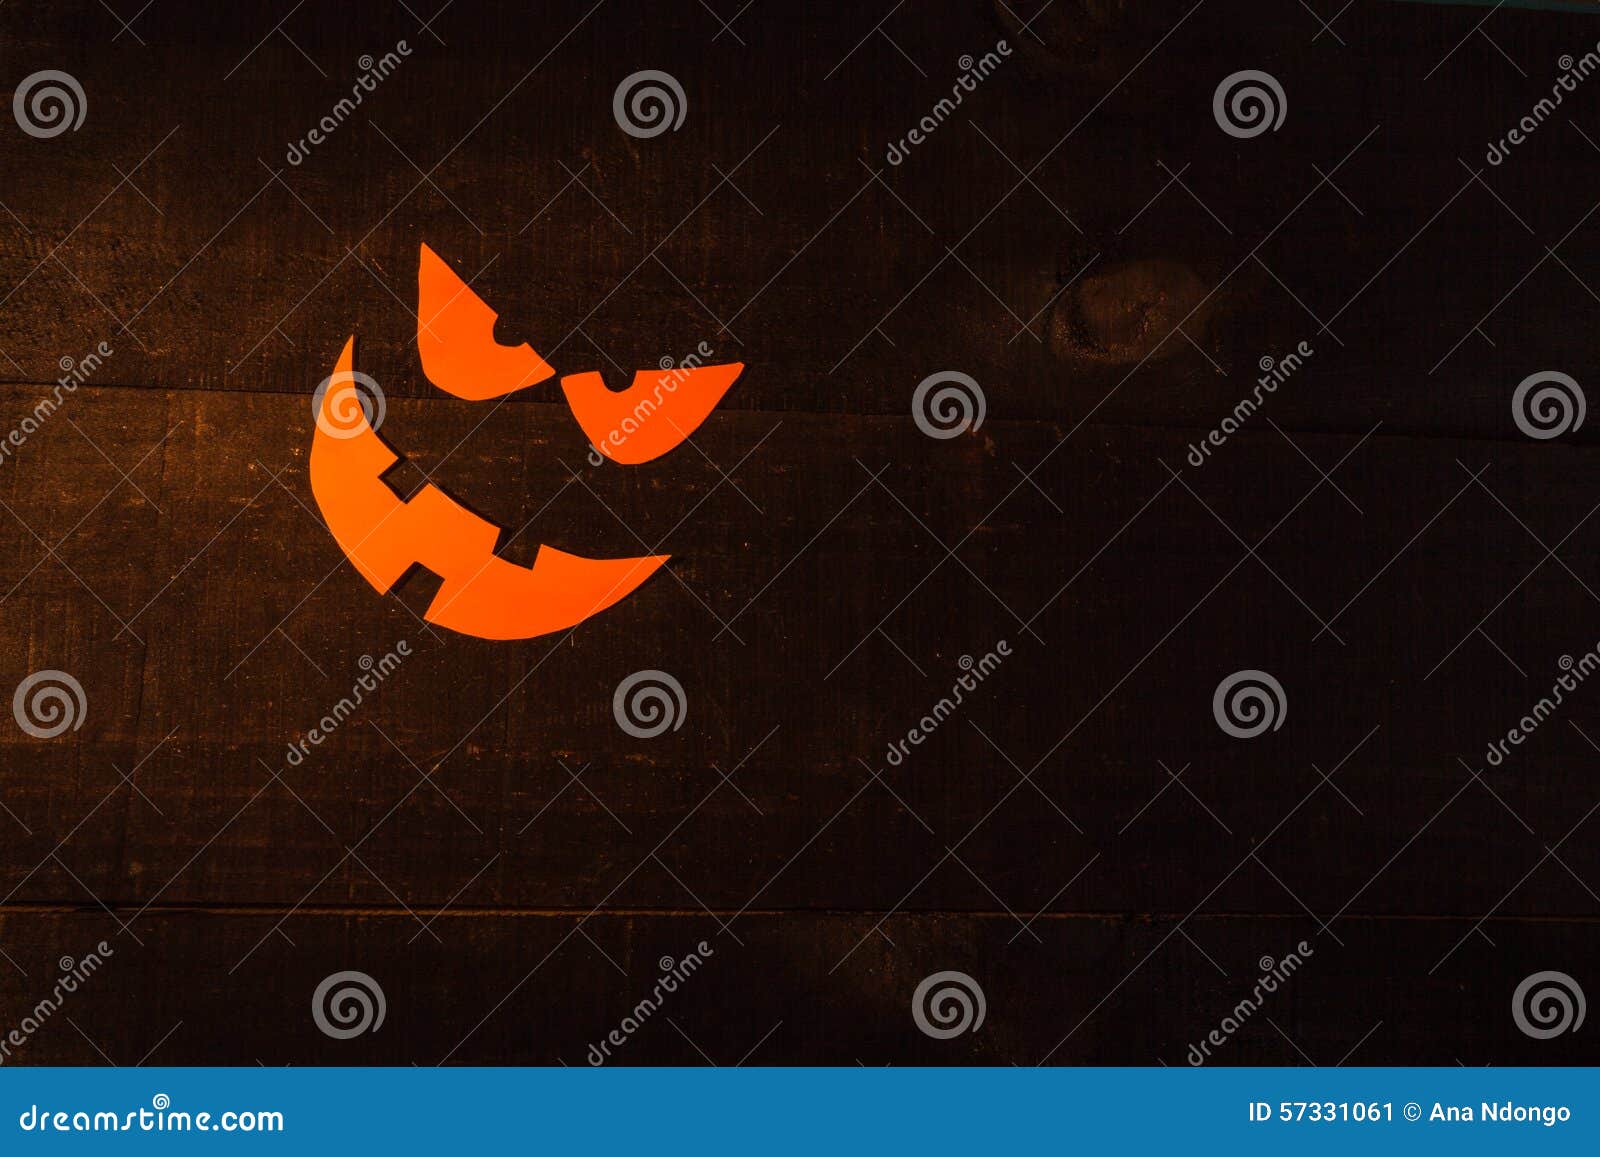 Halloween background stock image. Image of elements, design - 57331061